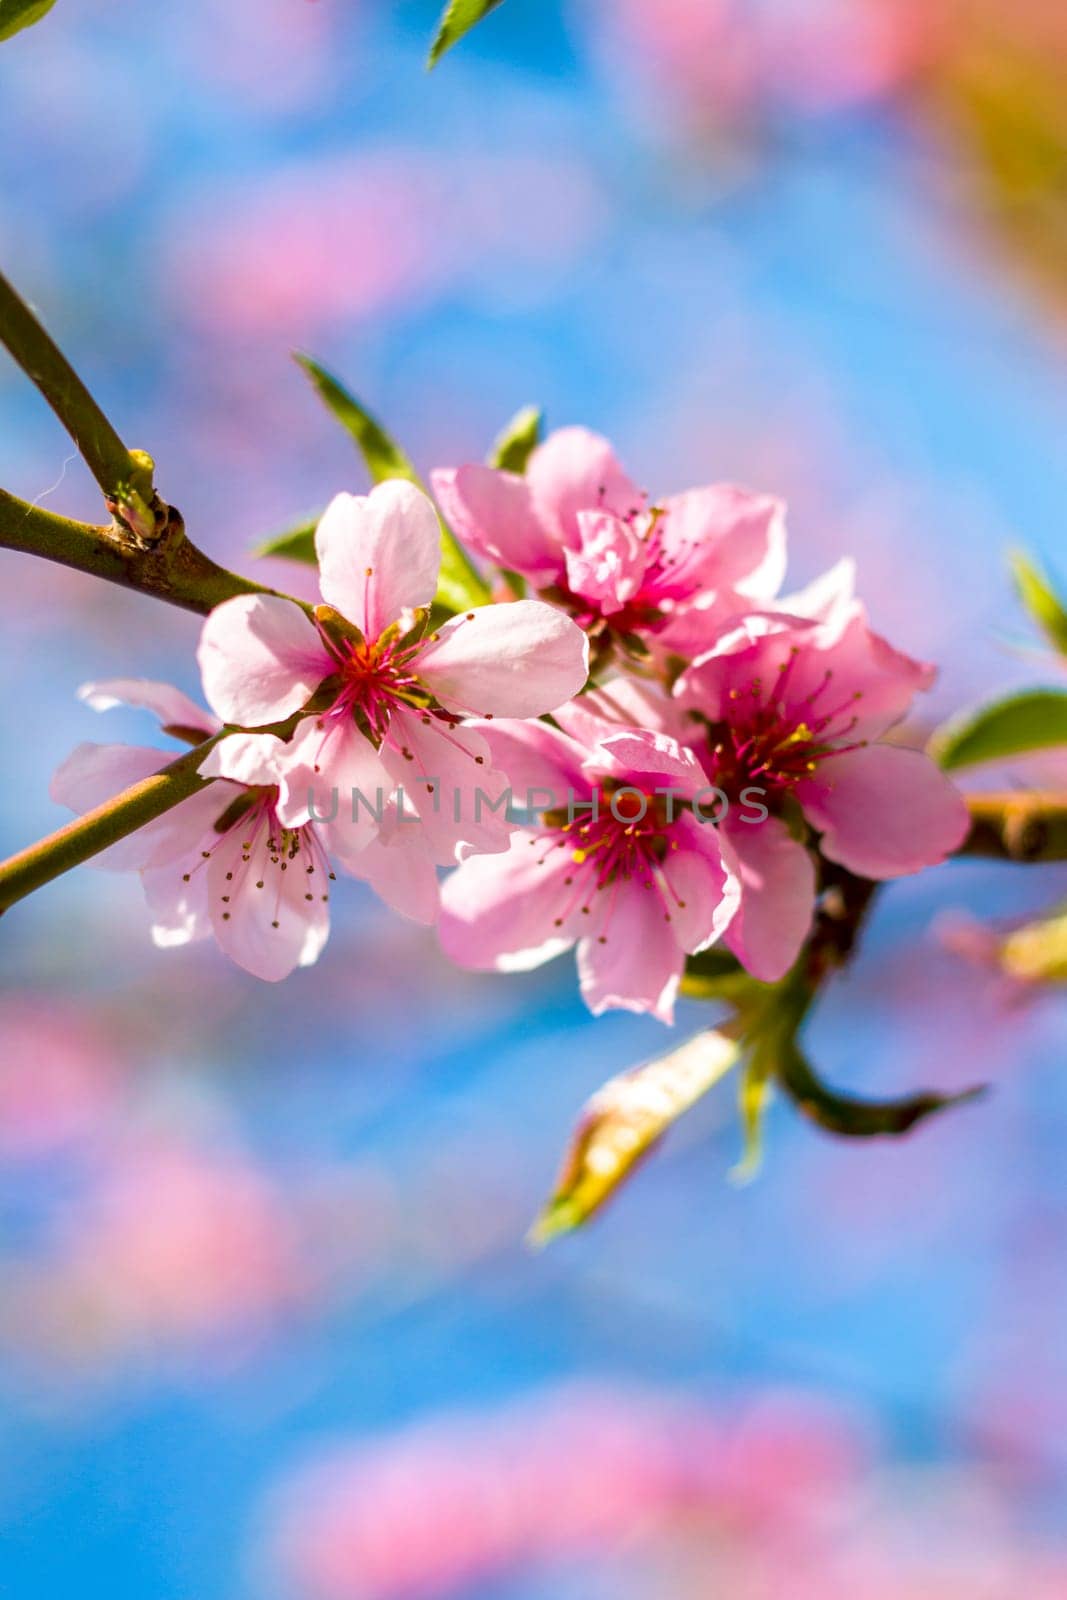 nectarine peach blossom flowers on spring branch by romvo